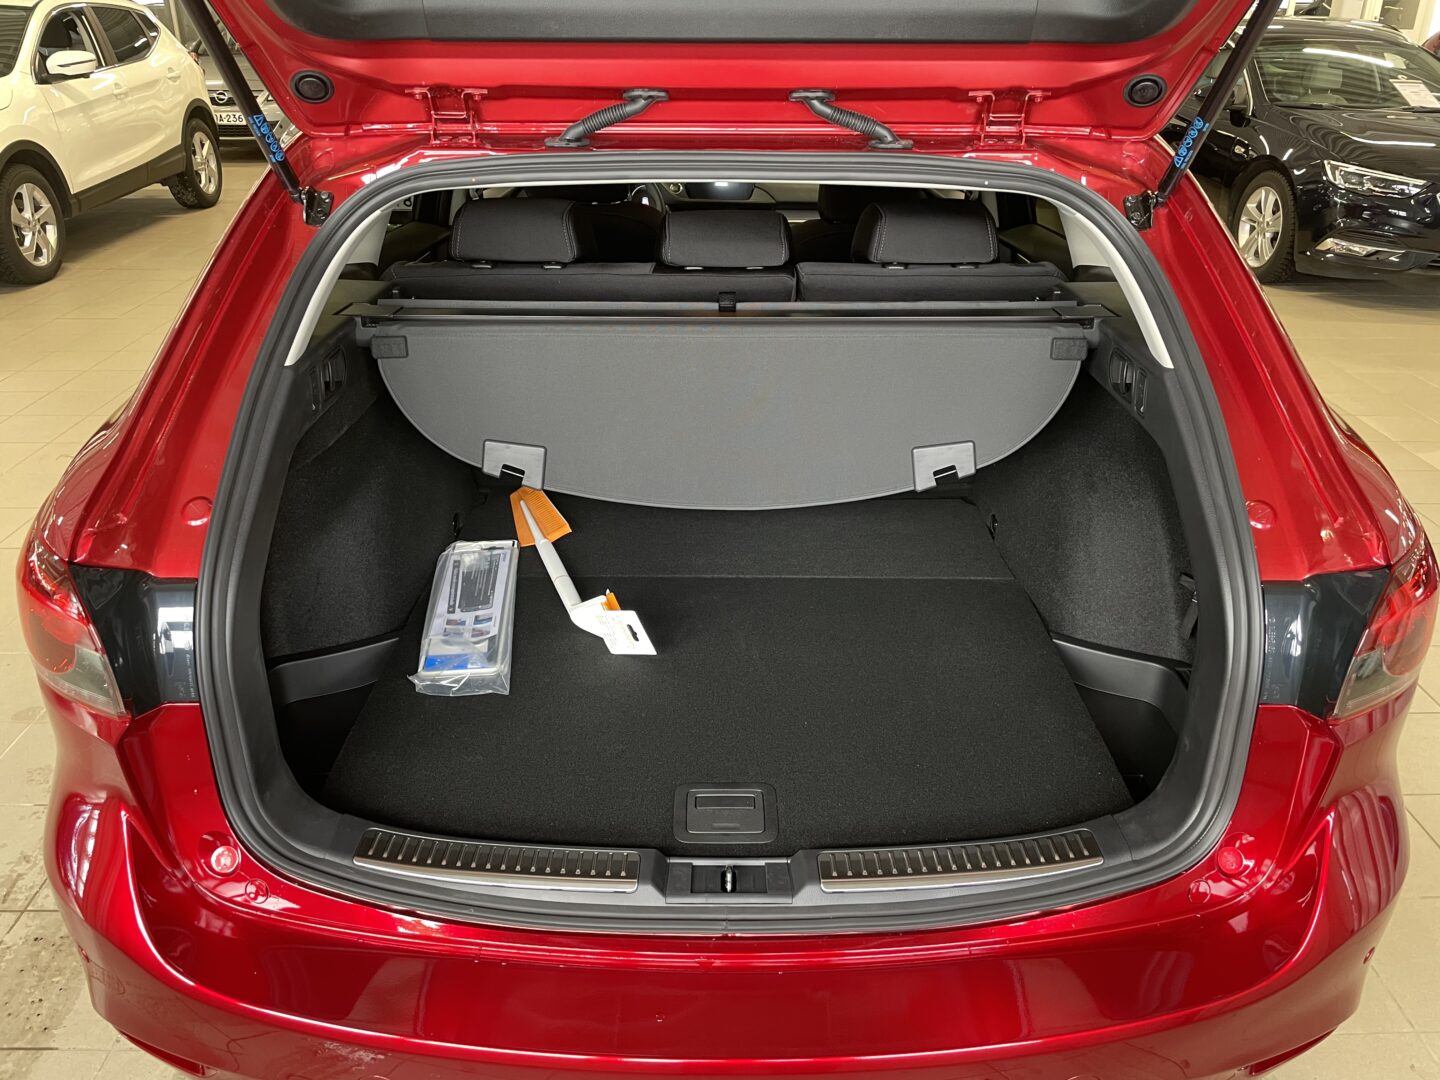 MAZDA 6 Mazda Sport Wagon 2,0 (165hv) Skyactiv-G AT Centre-line **Rahoituskorko 0% + kulut